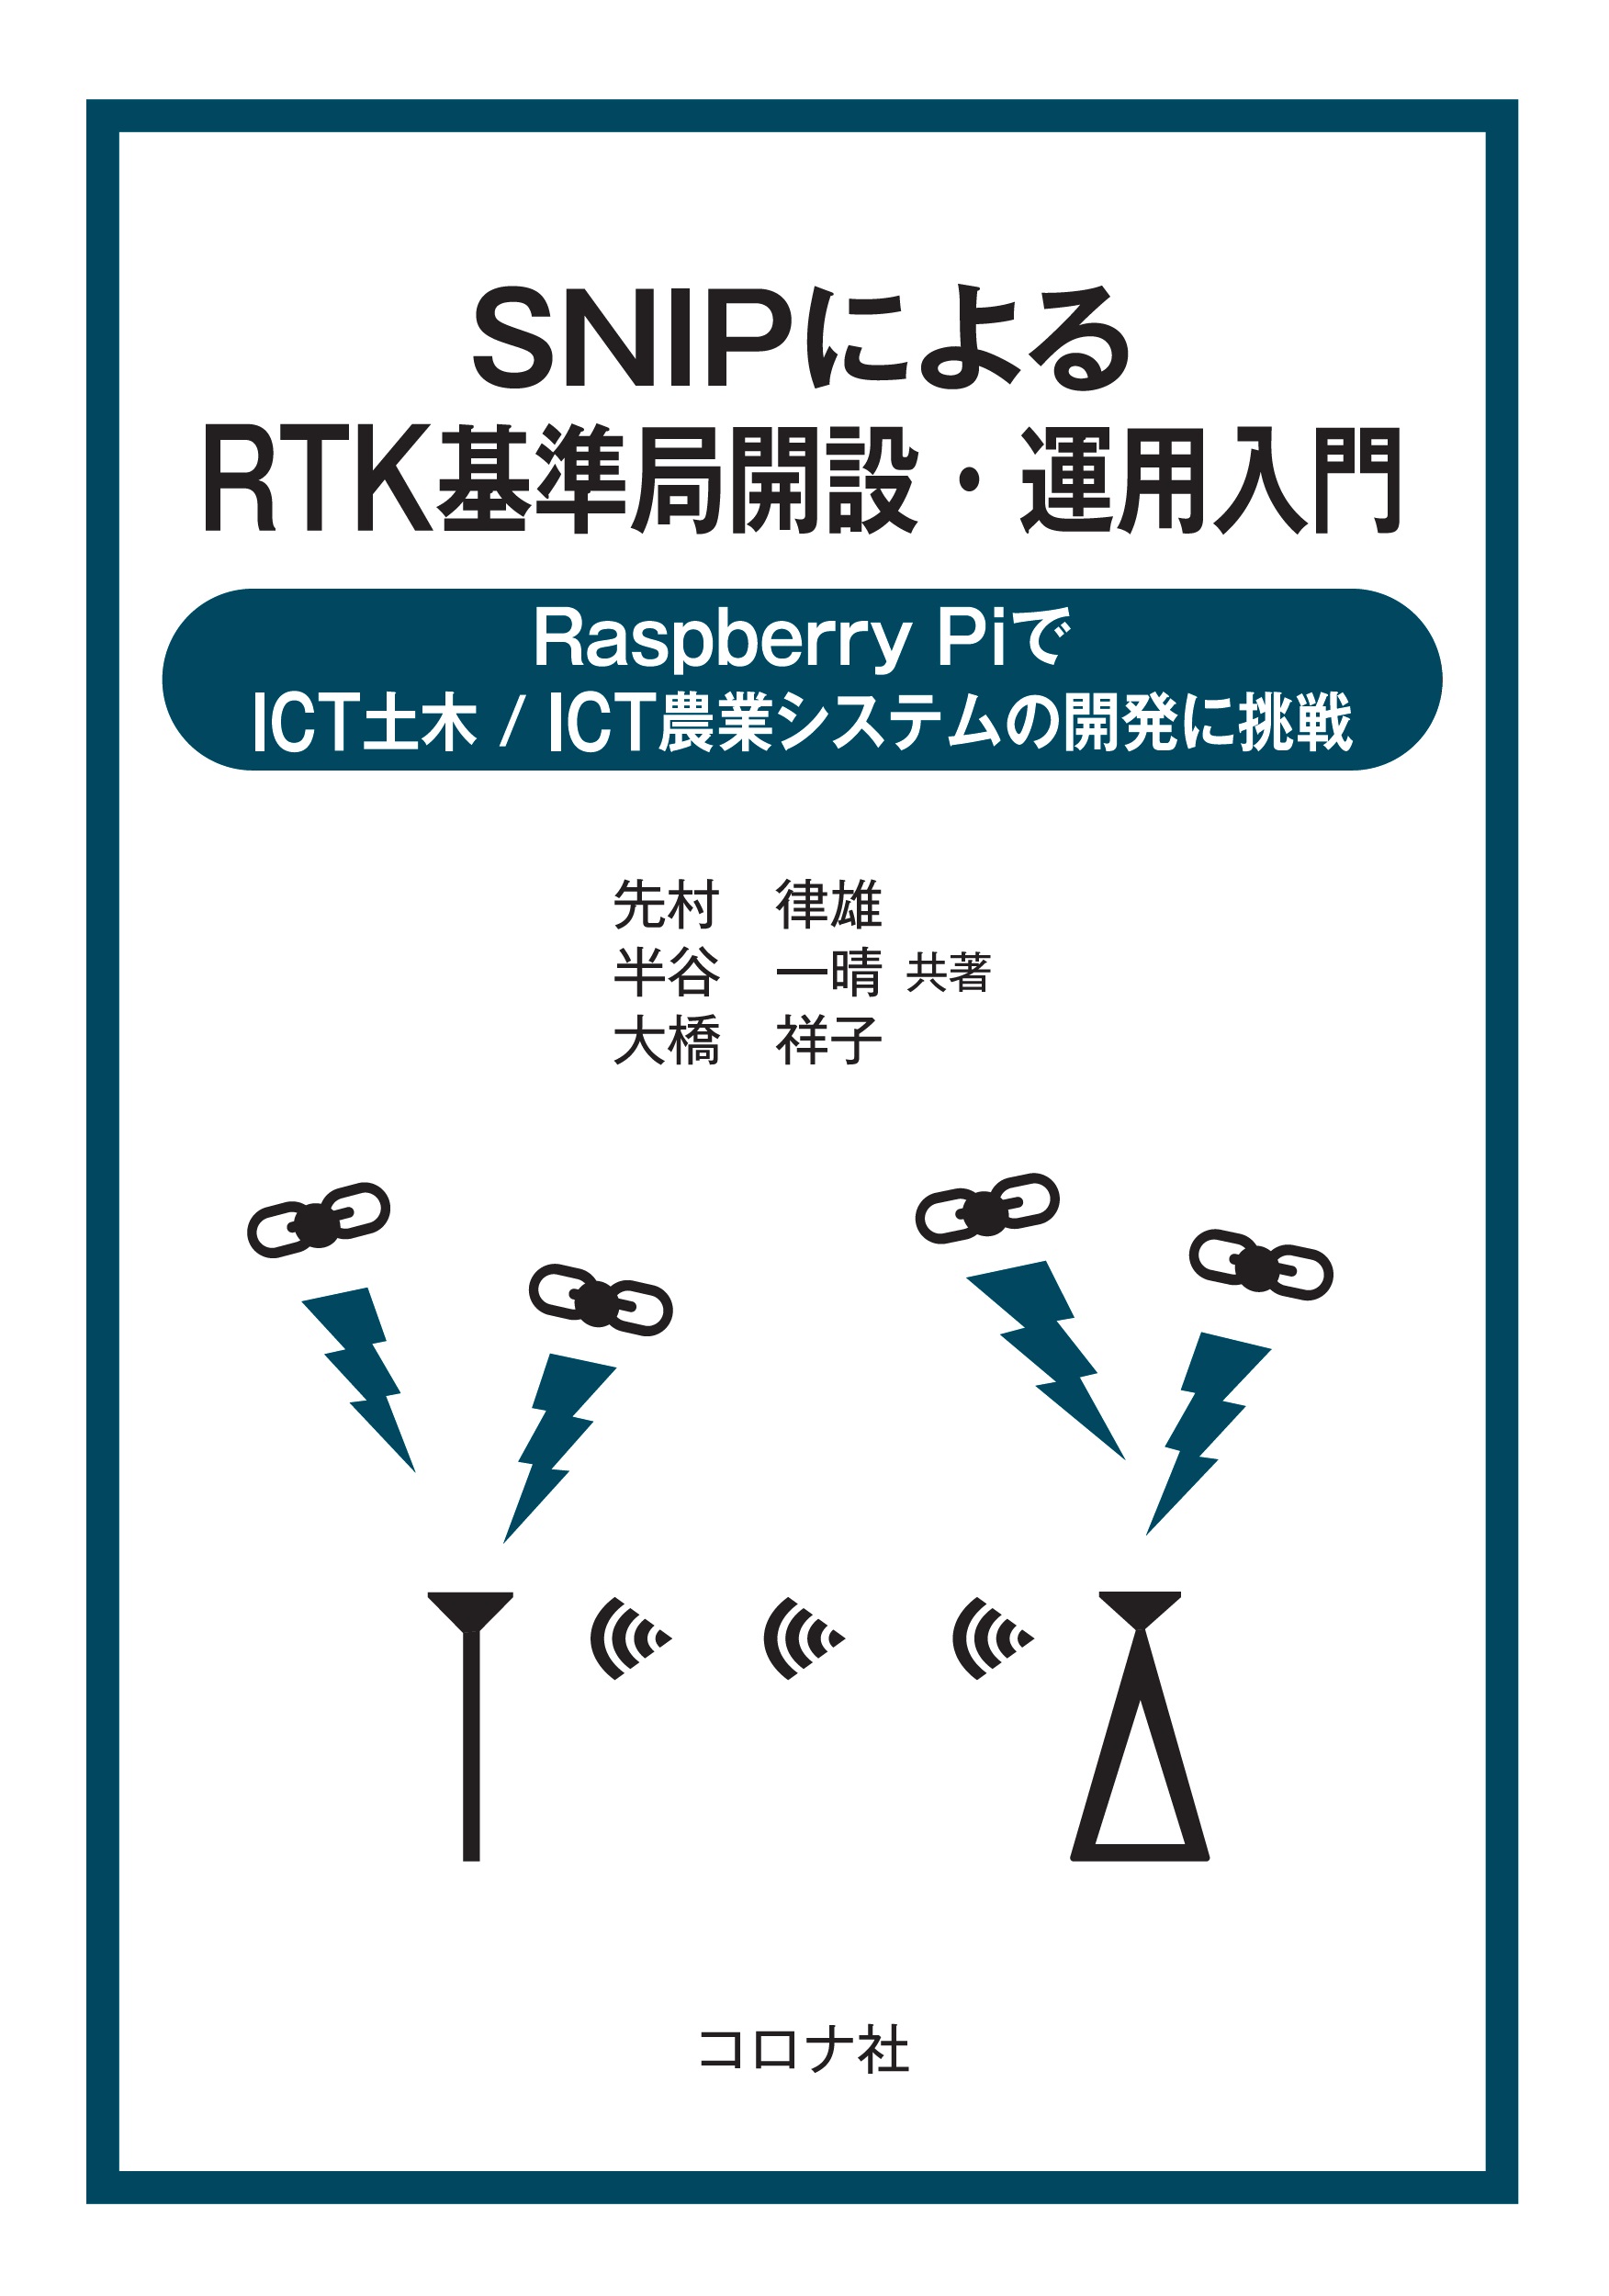 SNIPによるRTK基準局開設・運用入門 Raspberry PiでICT土木／ICT農業システムの開発に挑戦